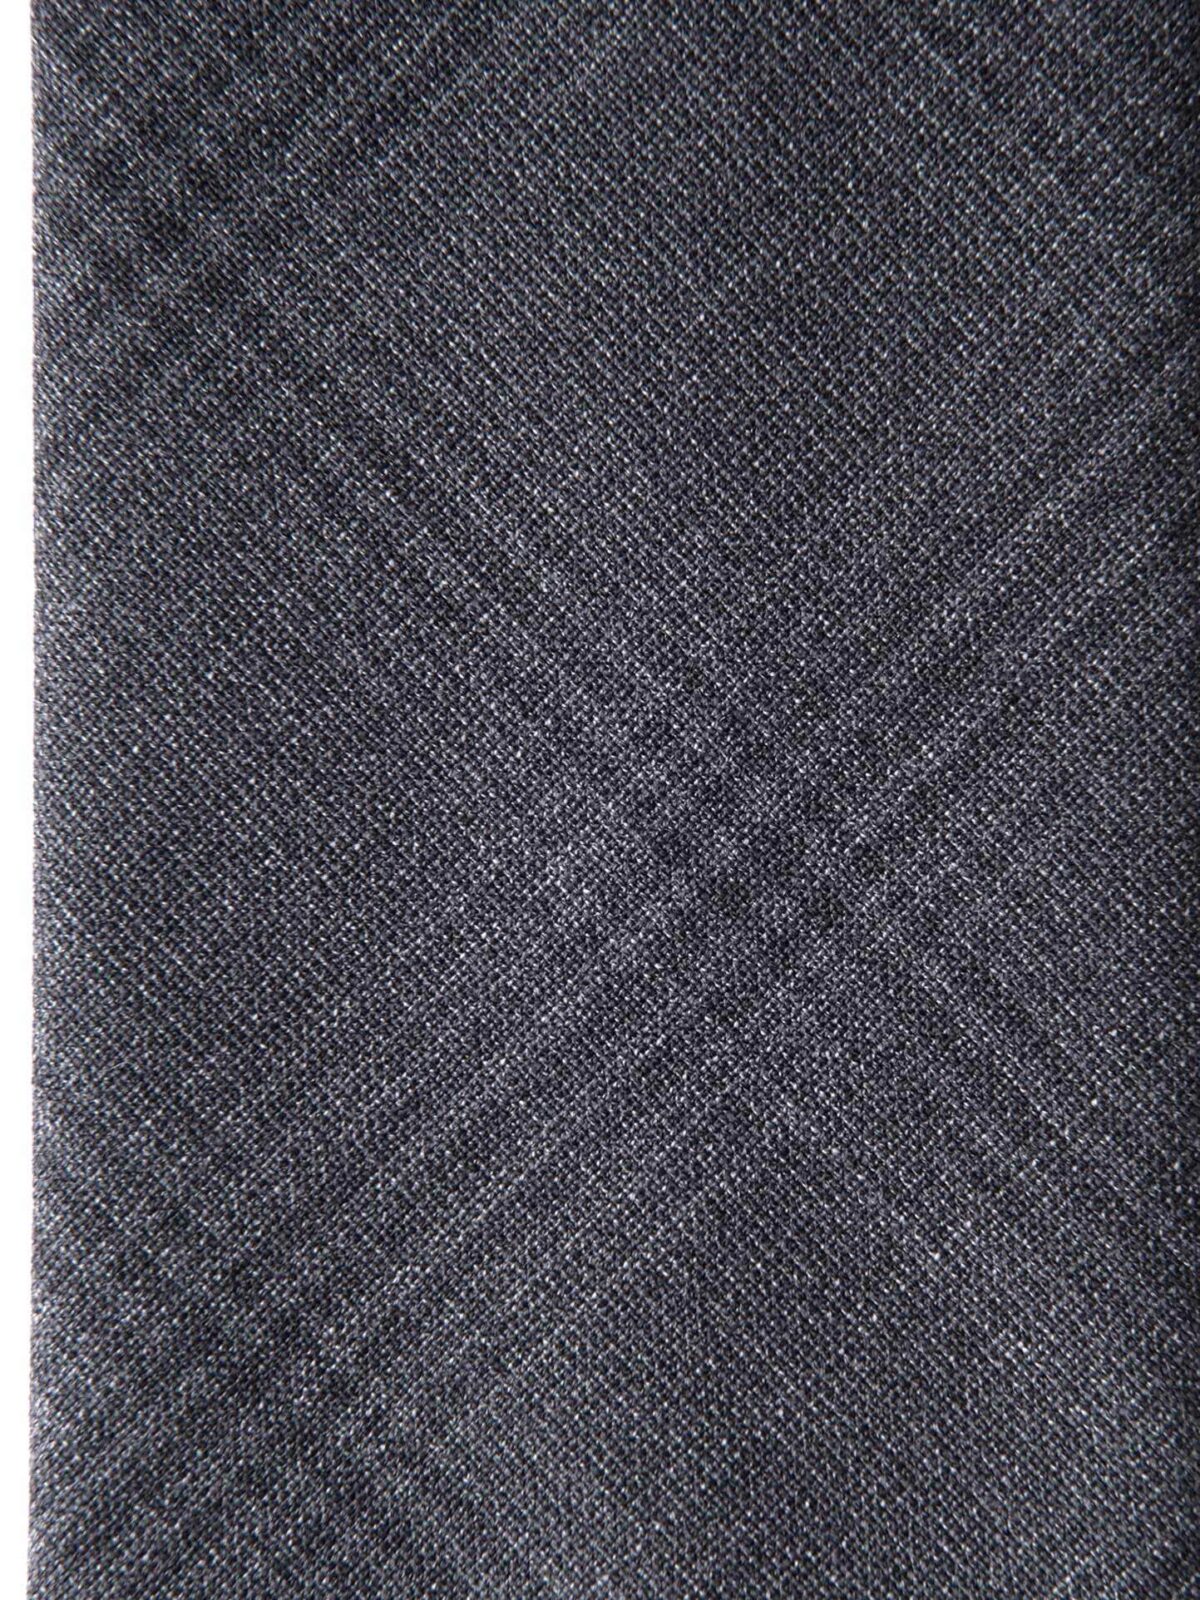 Charcoal Plaid Wool Tie